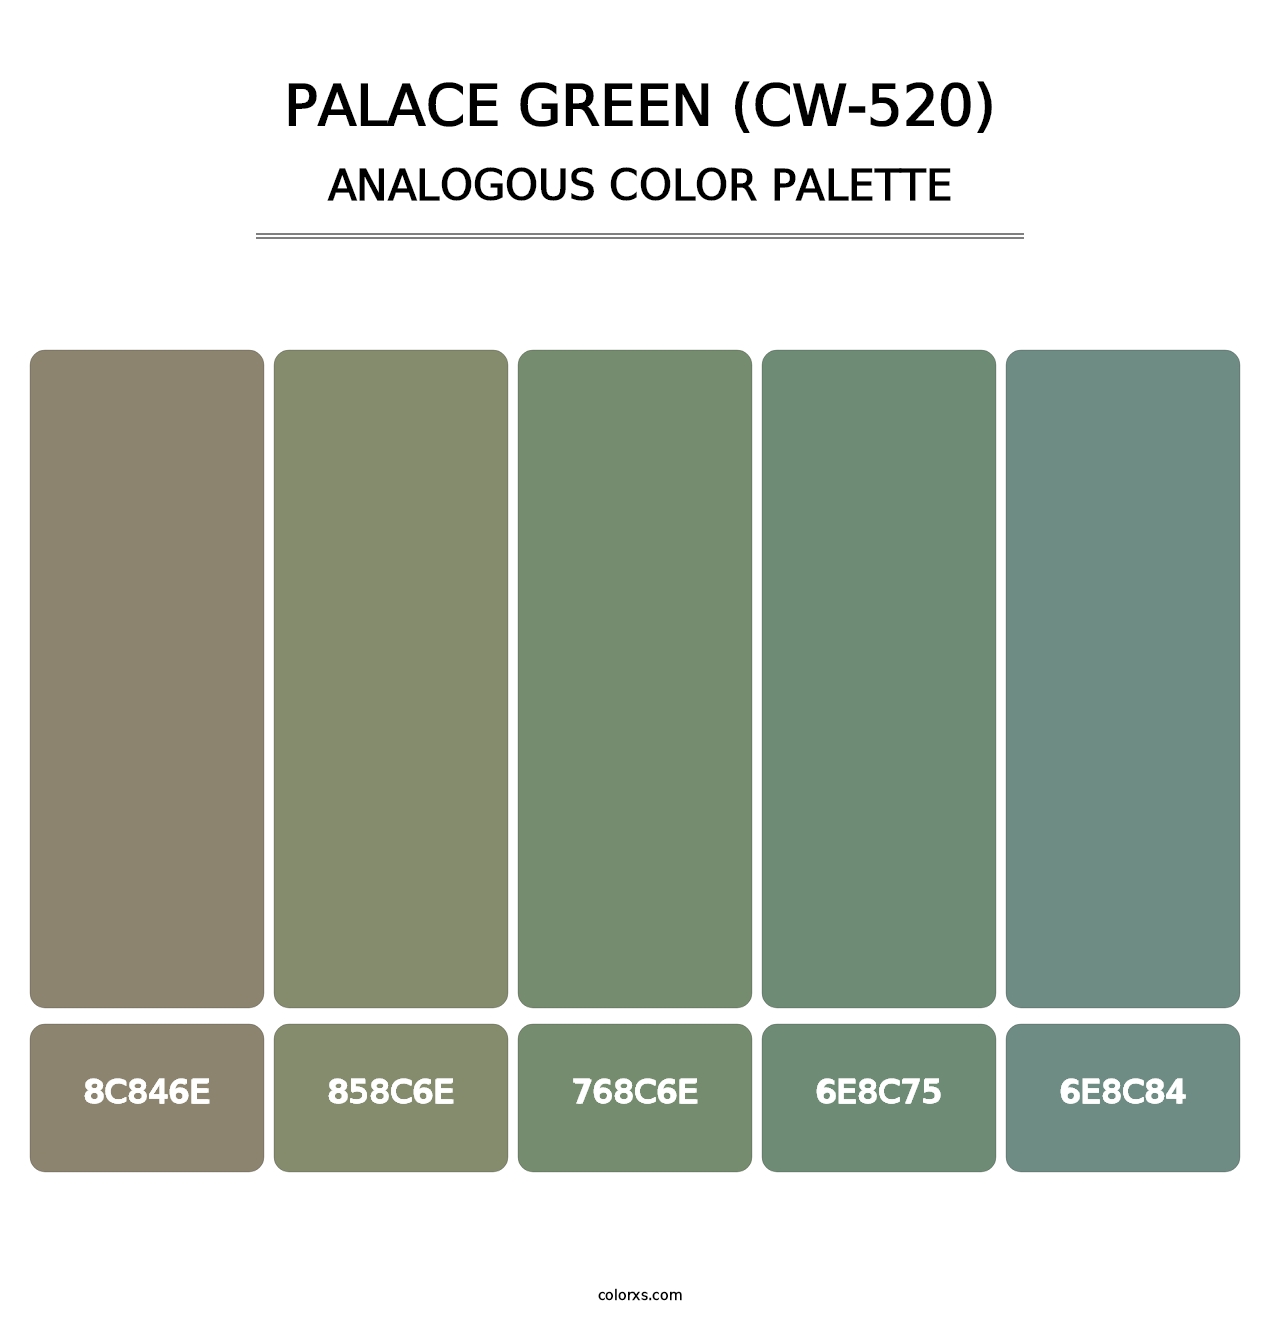 Palace Green (CW-520) - Analogous Color Palette